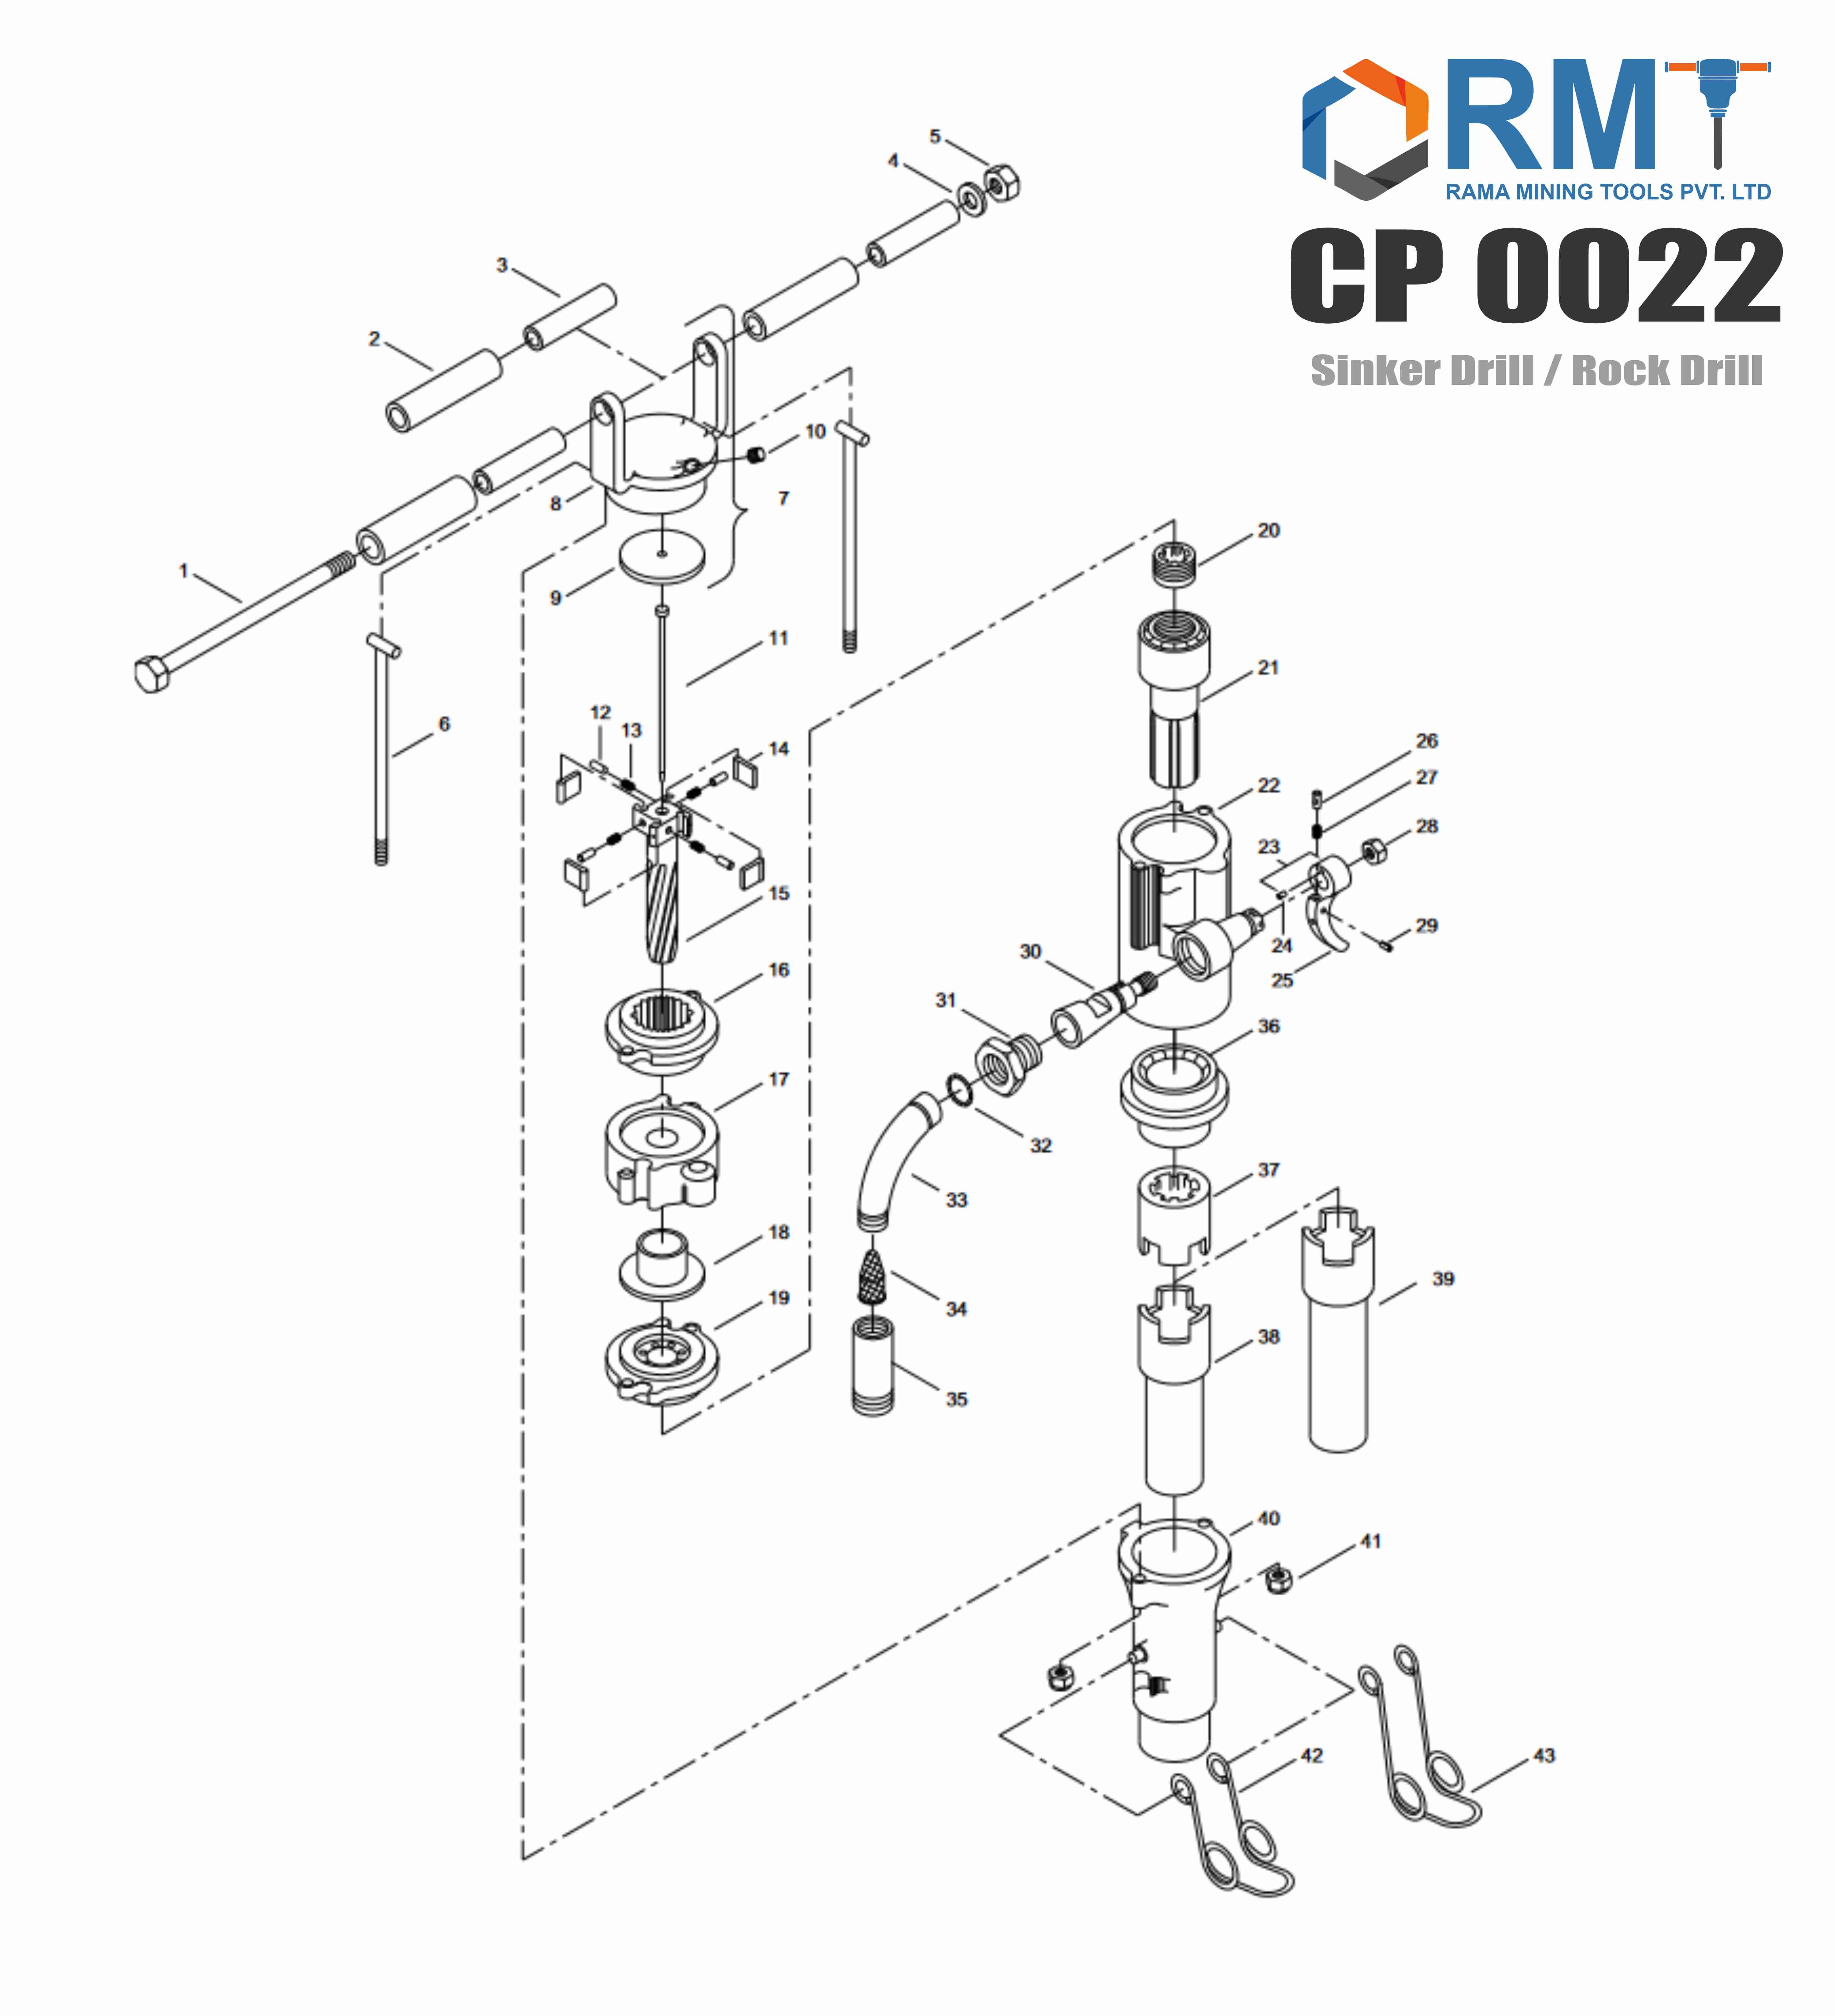 CP 0022 - Pneumatic Rock Drills